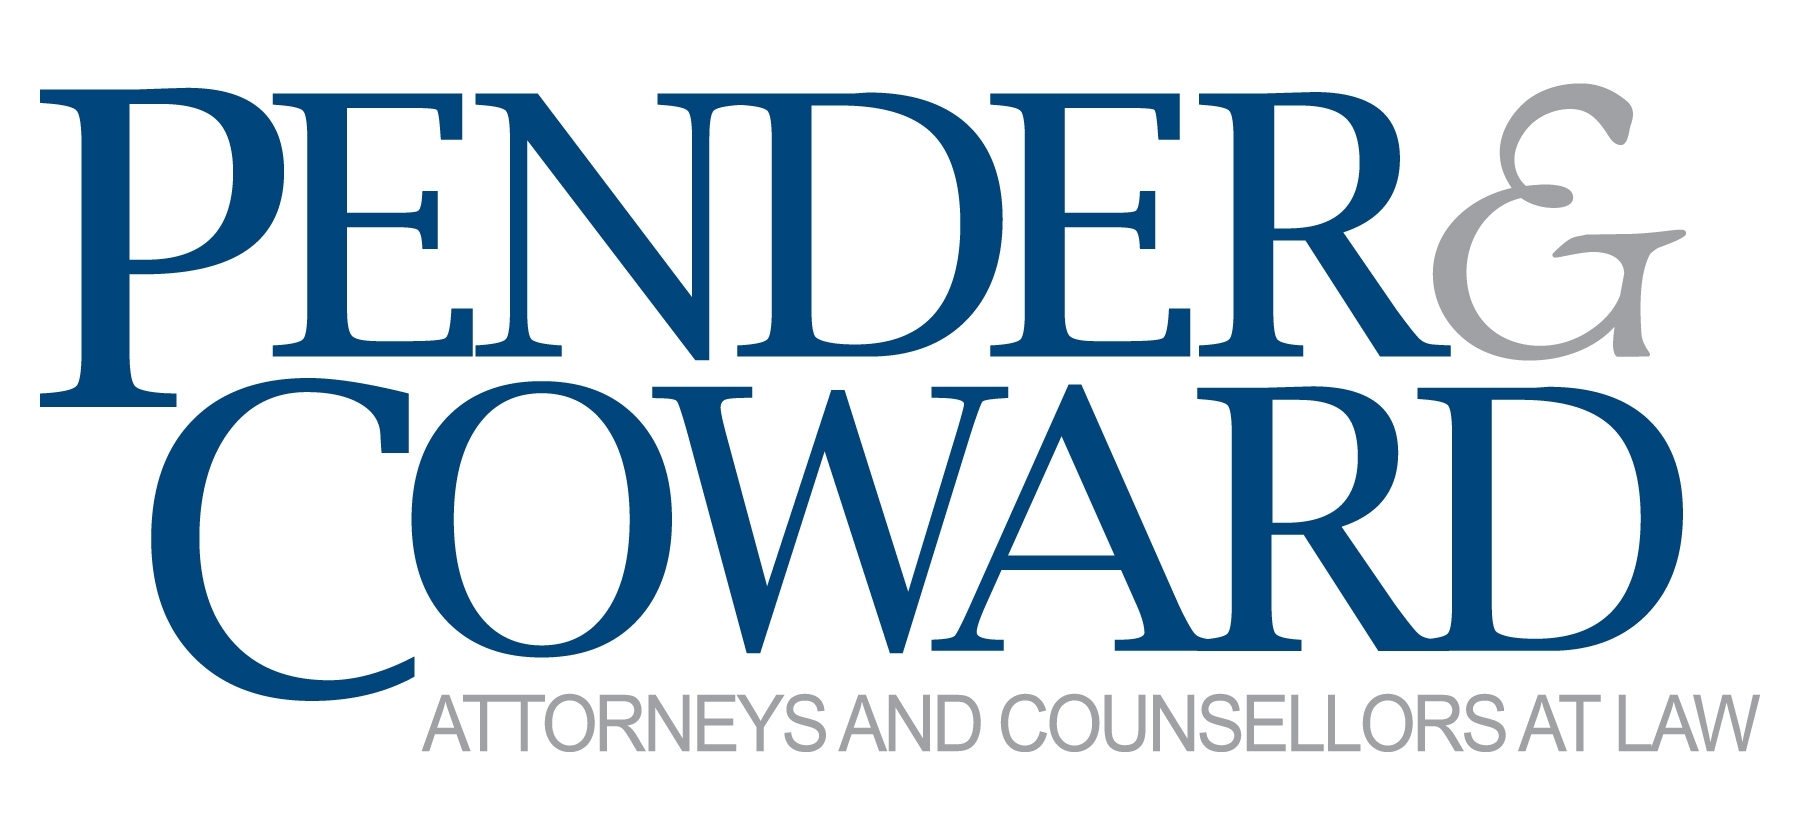 Pender & Coward Shareholder Richard Garriott Inducted as Fellow of American Bar Foundation